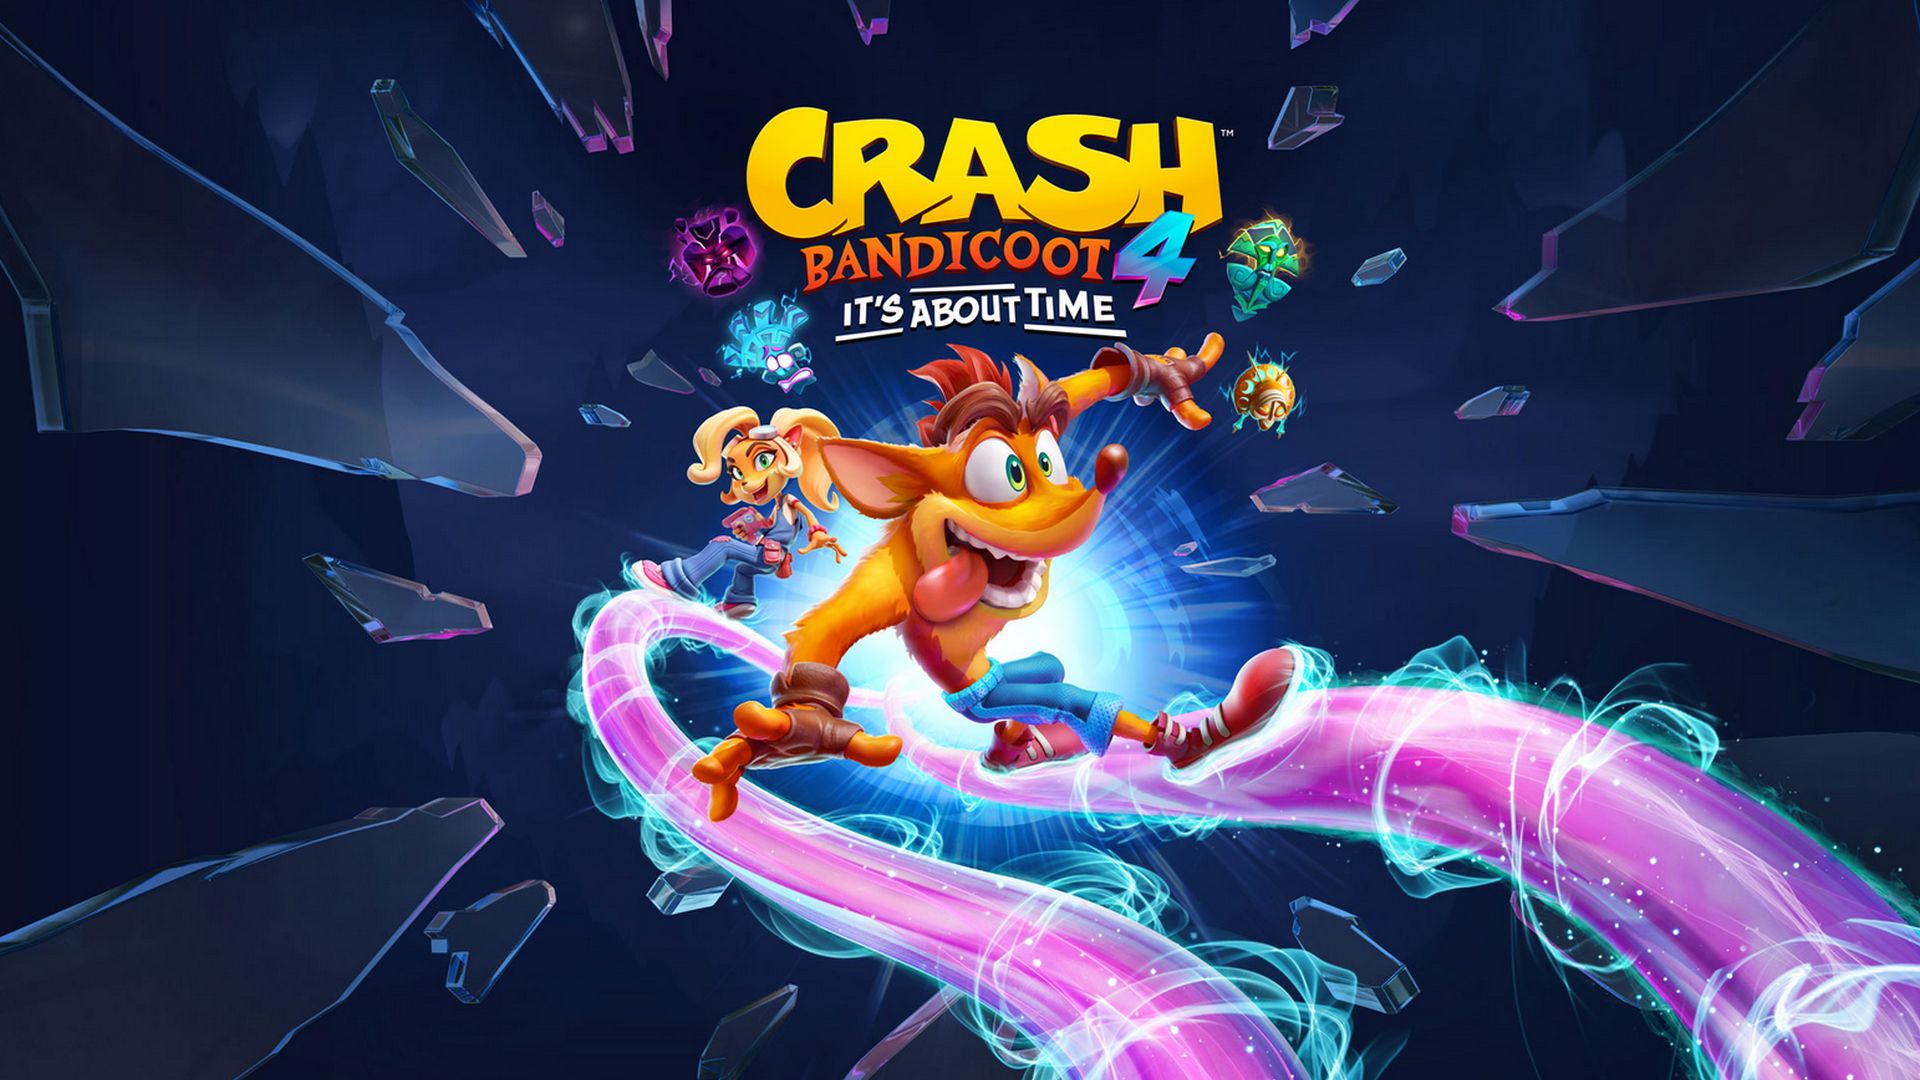 Crash Bandicoot 4 اب وقت آگیا ہے۔